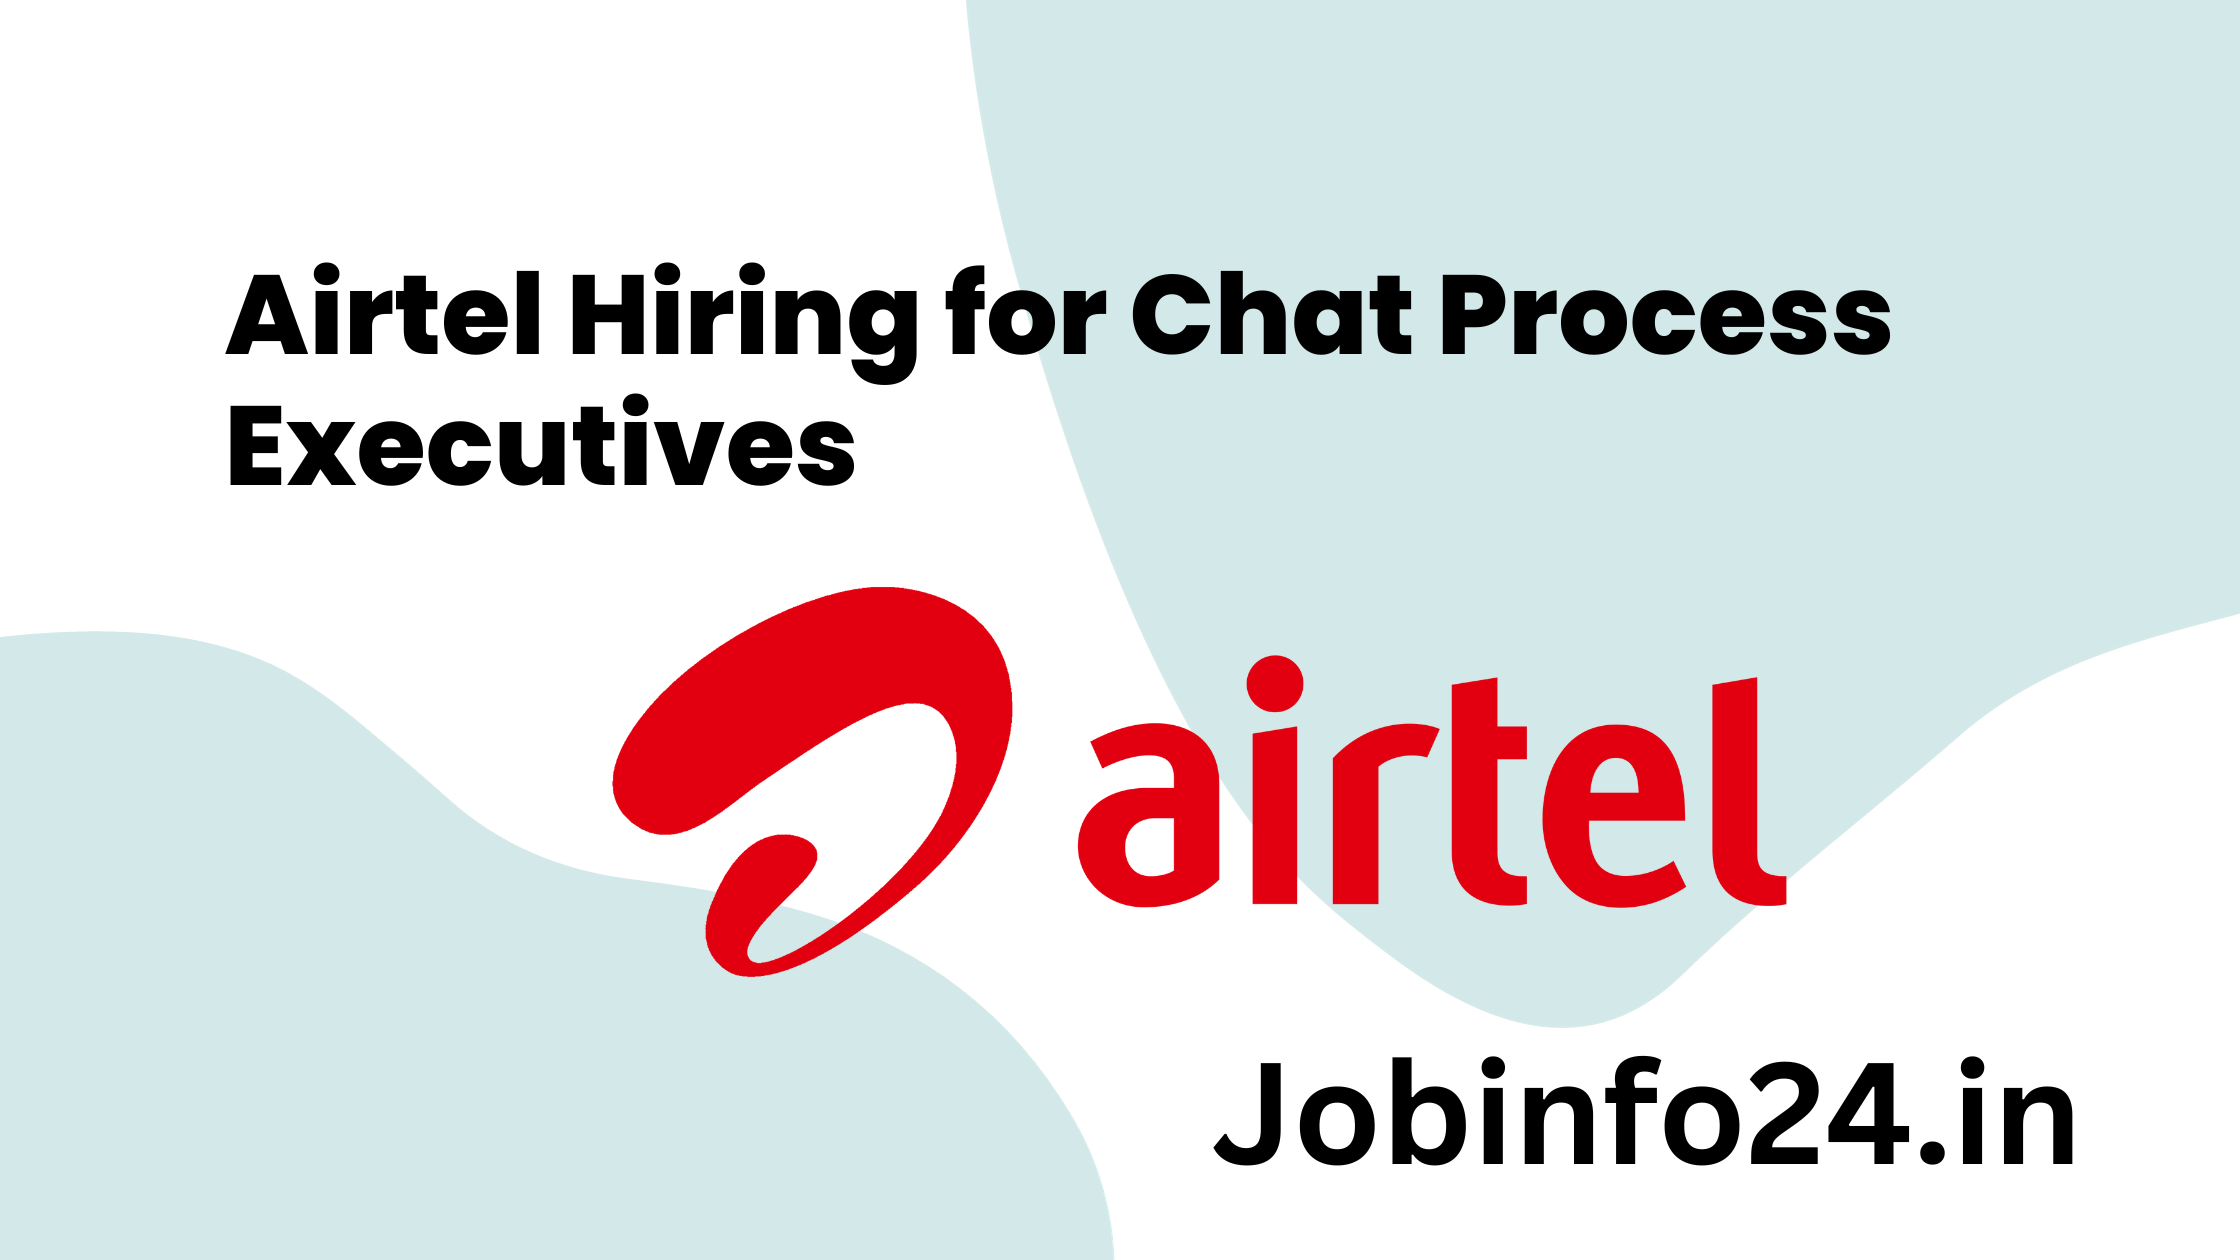 Airtel Hiring for Chat Process Executives